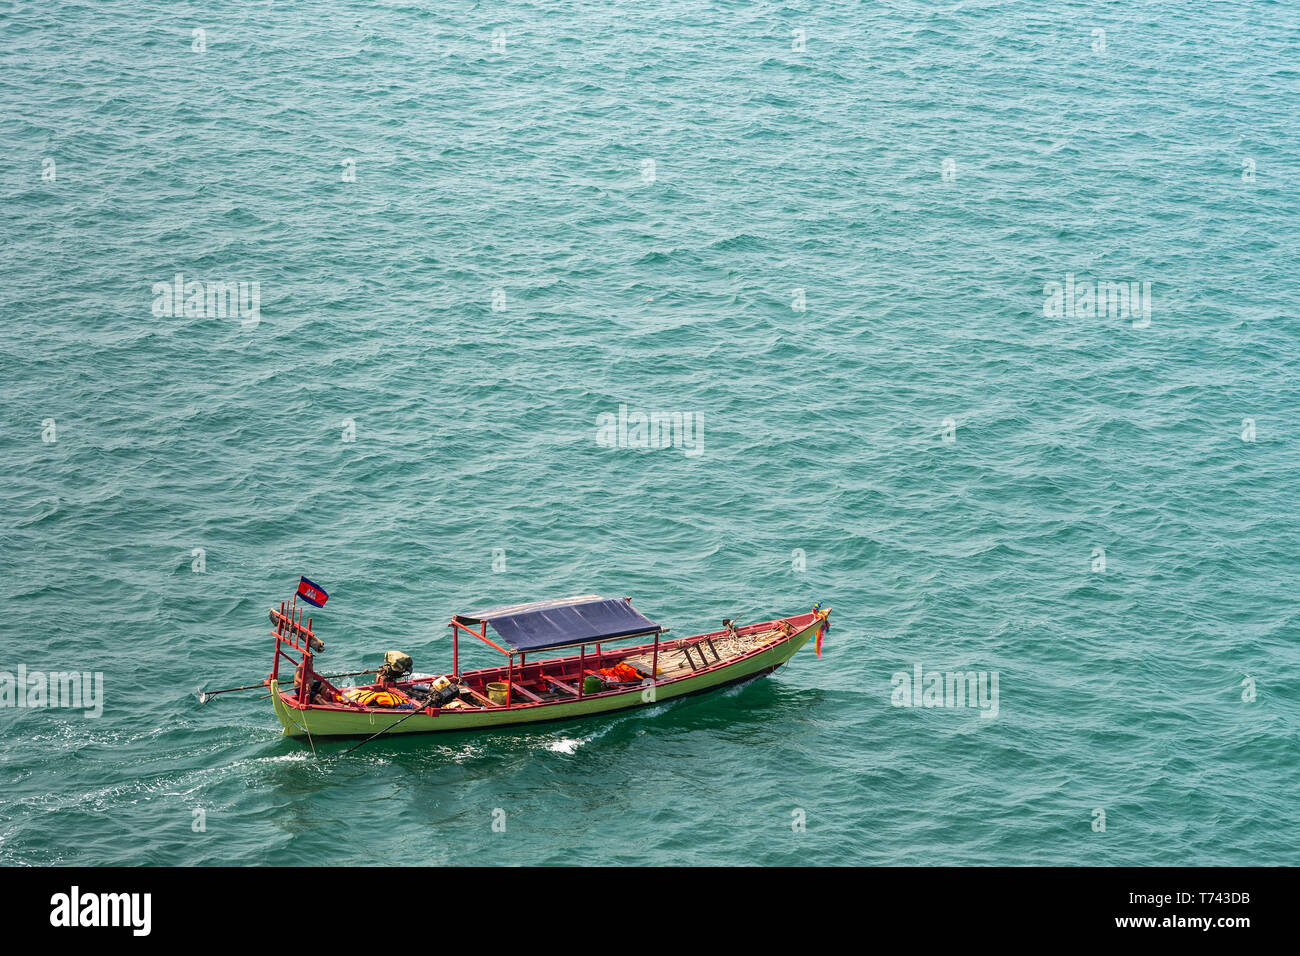 Sihanoukville, Cambodia - March 15, 2019: Small green and red fishing sloop on greenish sea water outside Sihanouk Autonomous Port. Stock Photo